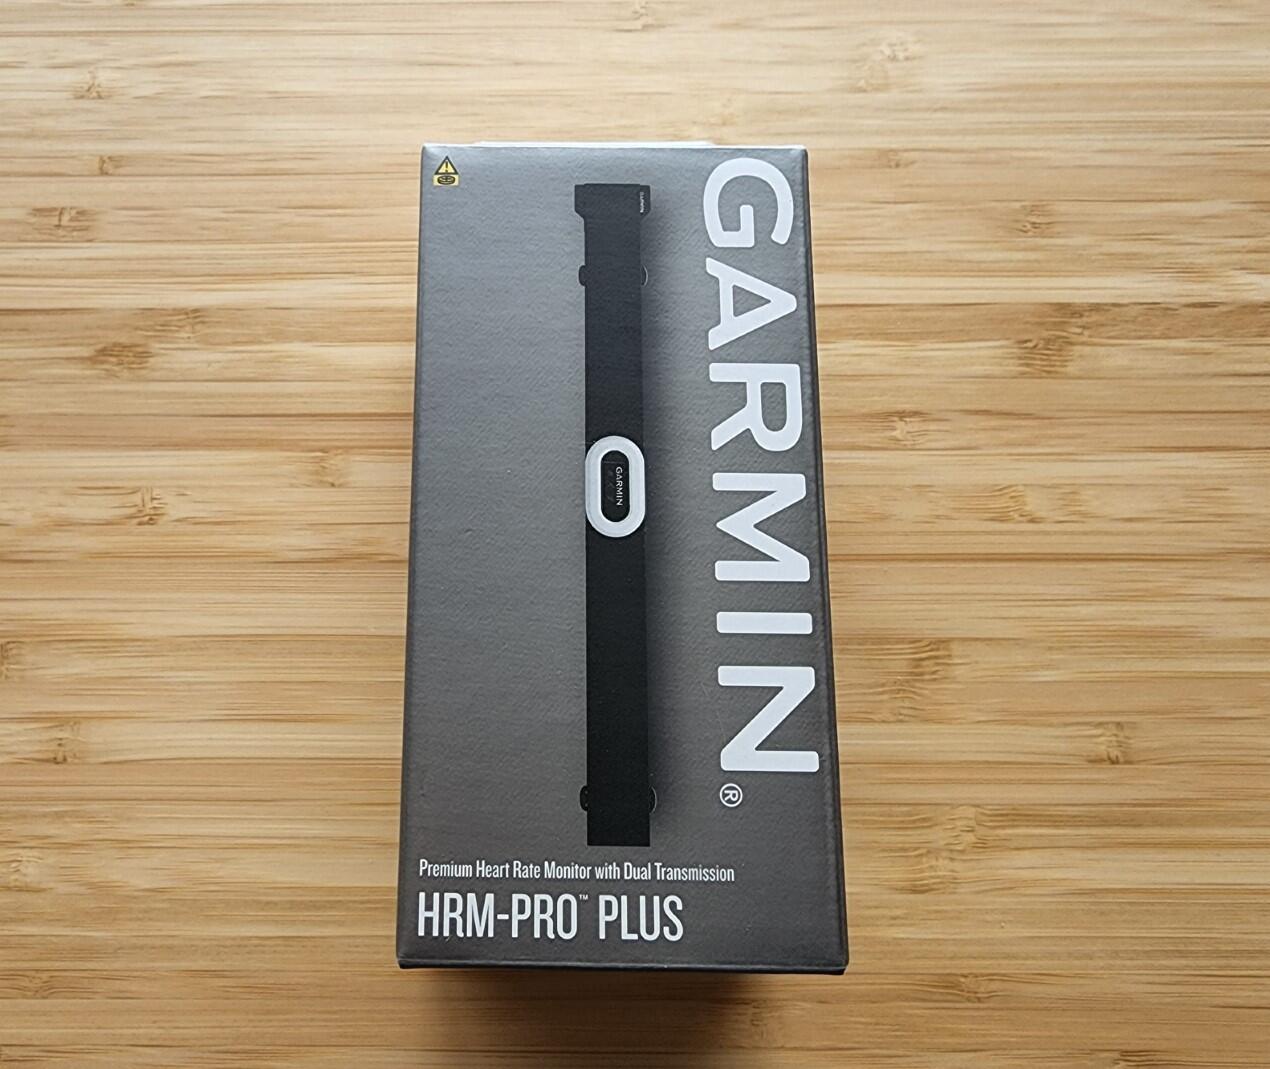 Garmin HRM-Pro Plus review: very handy design update, same | ZDNET